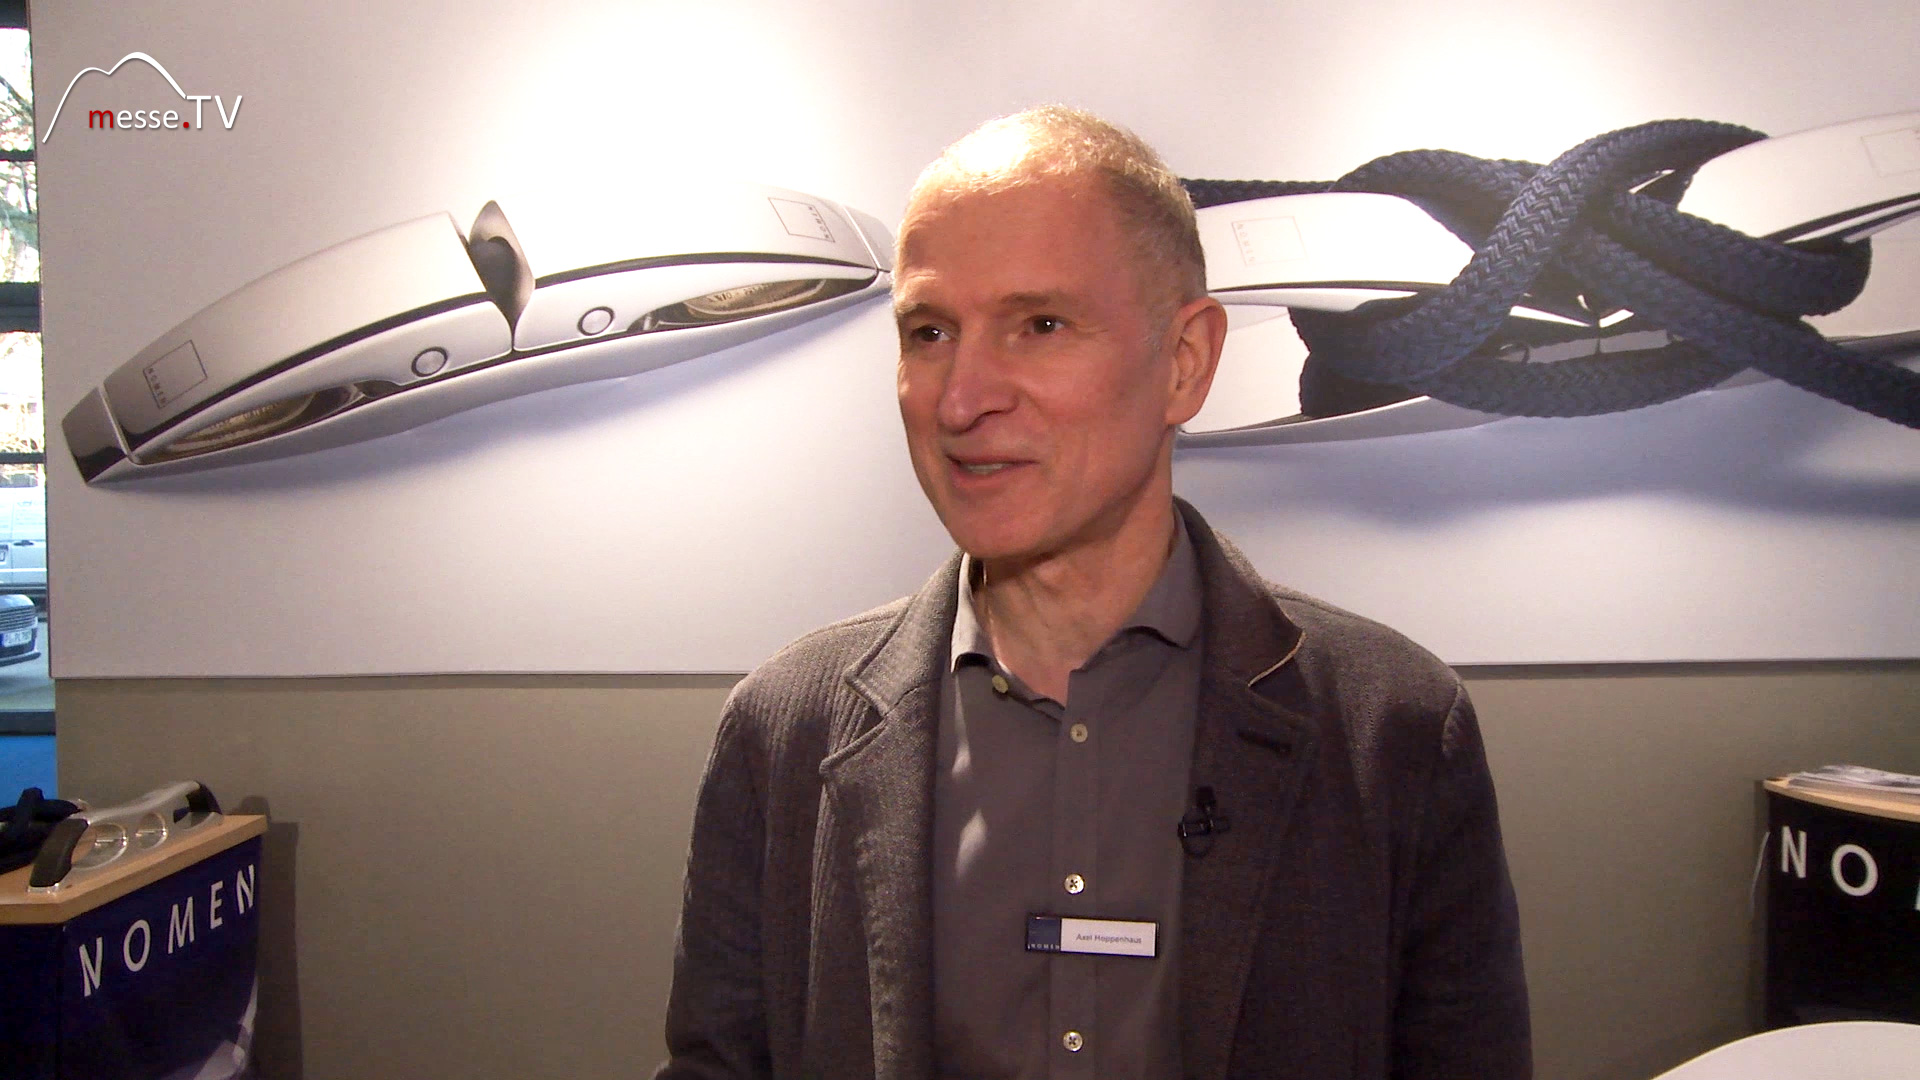 MesseTV interview Axel Hoppenhaus Nomen boat